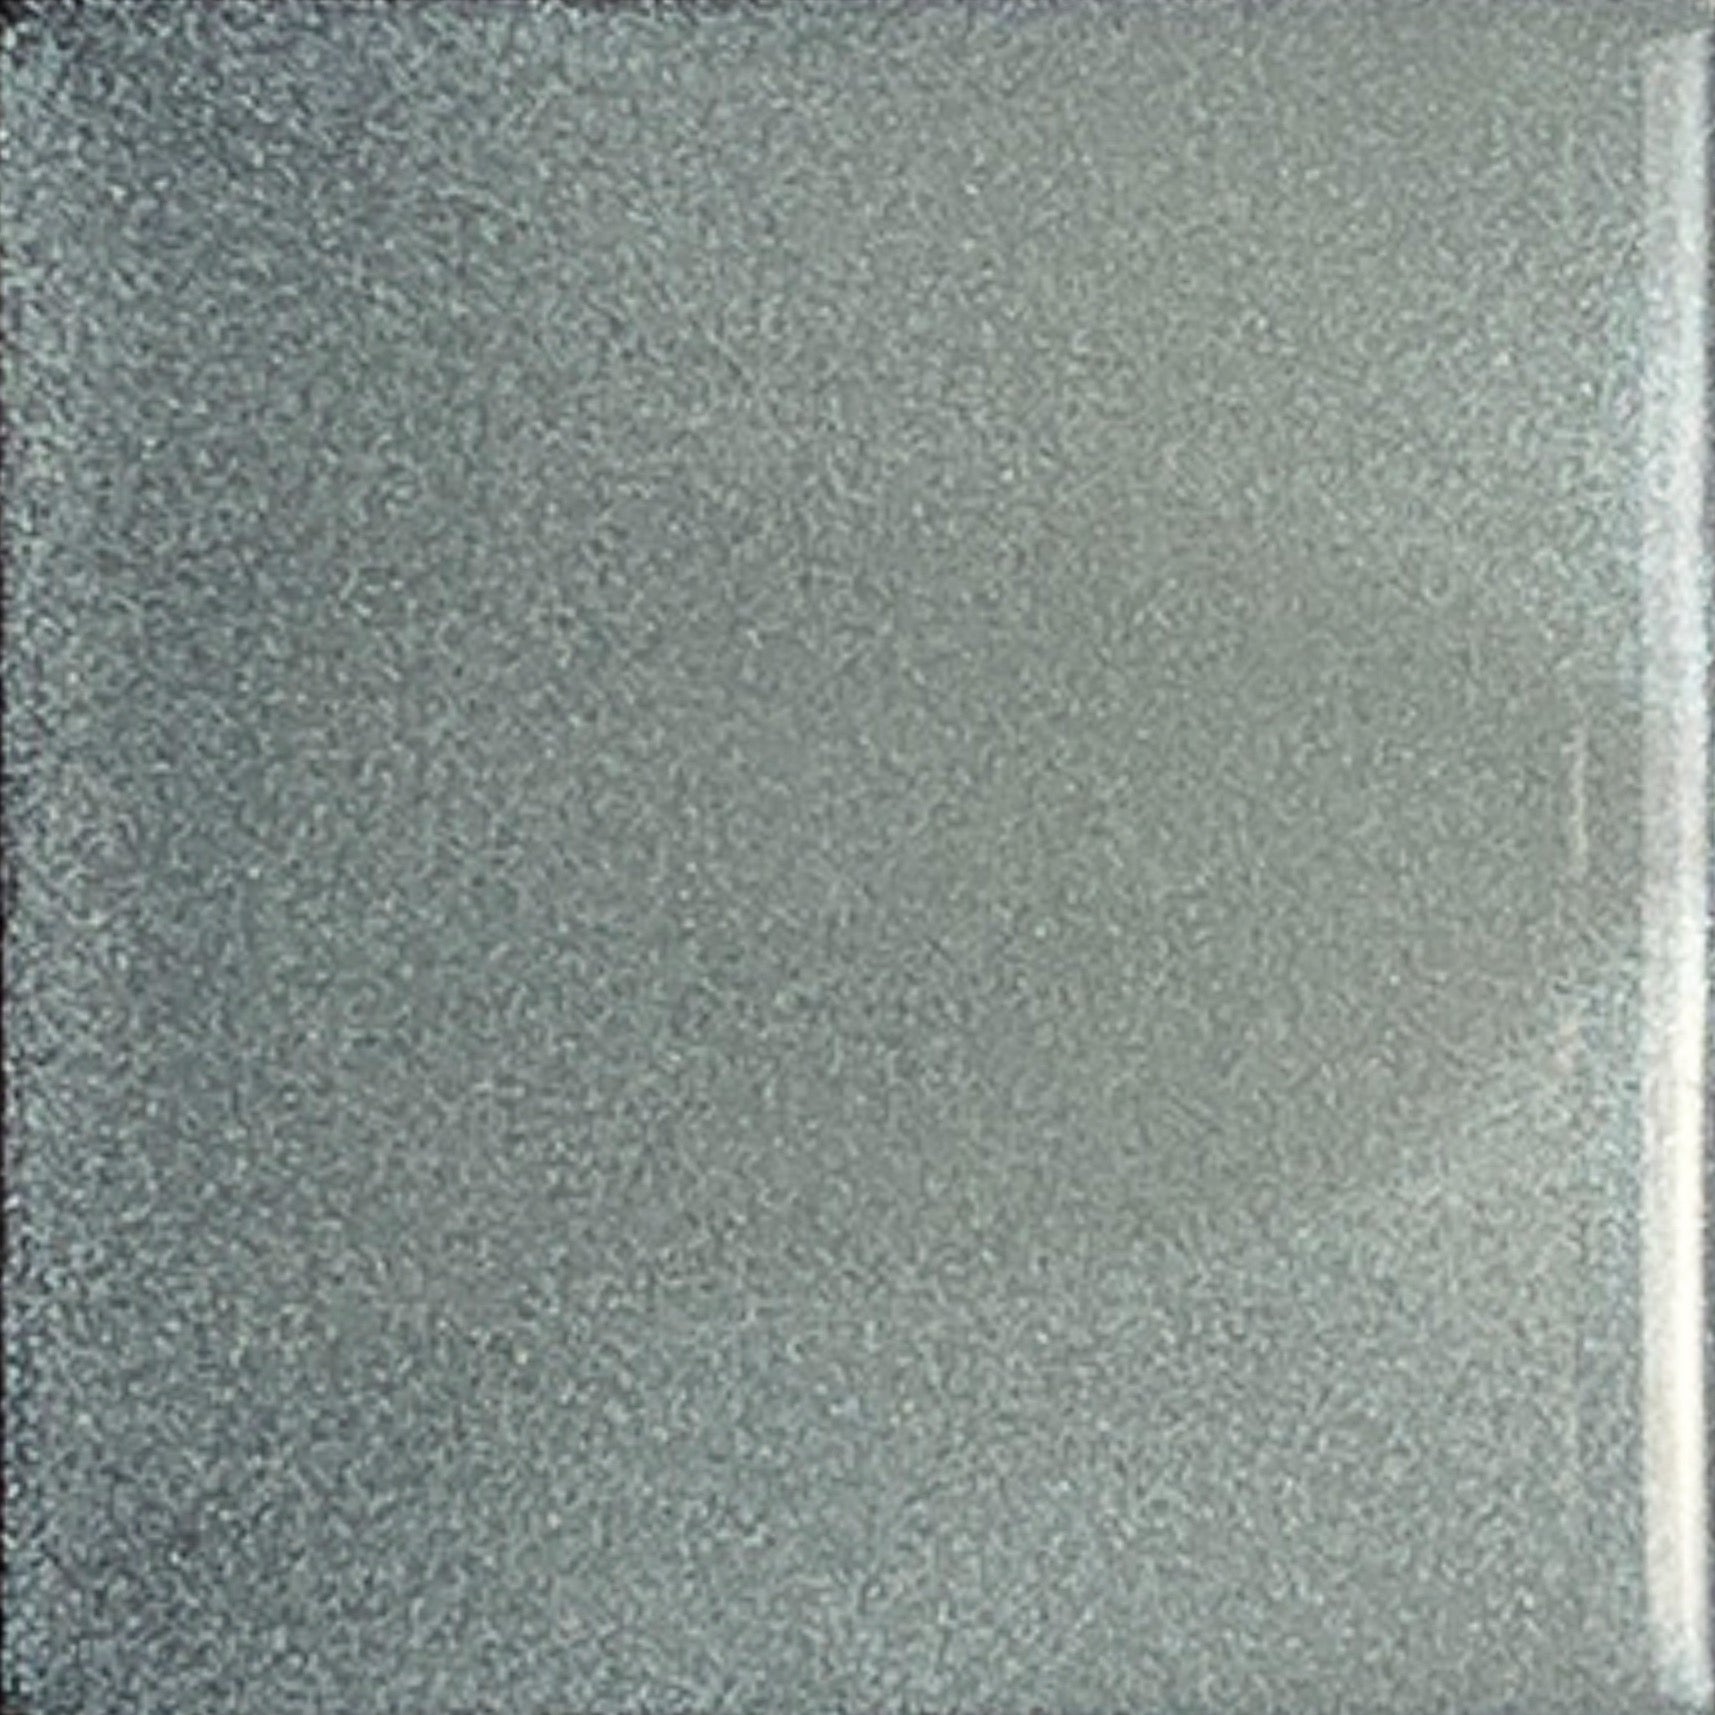 Xtreme Polishing Systems metallic floor colors.